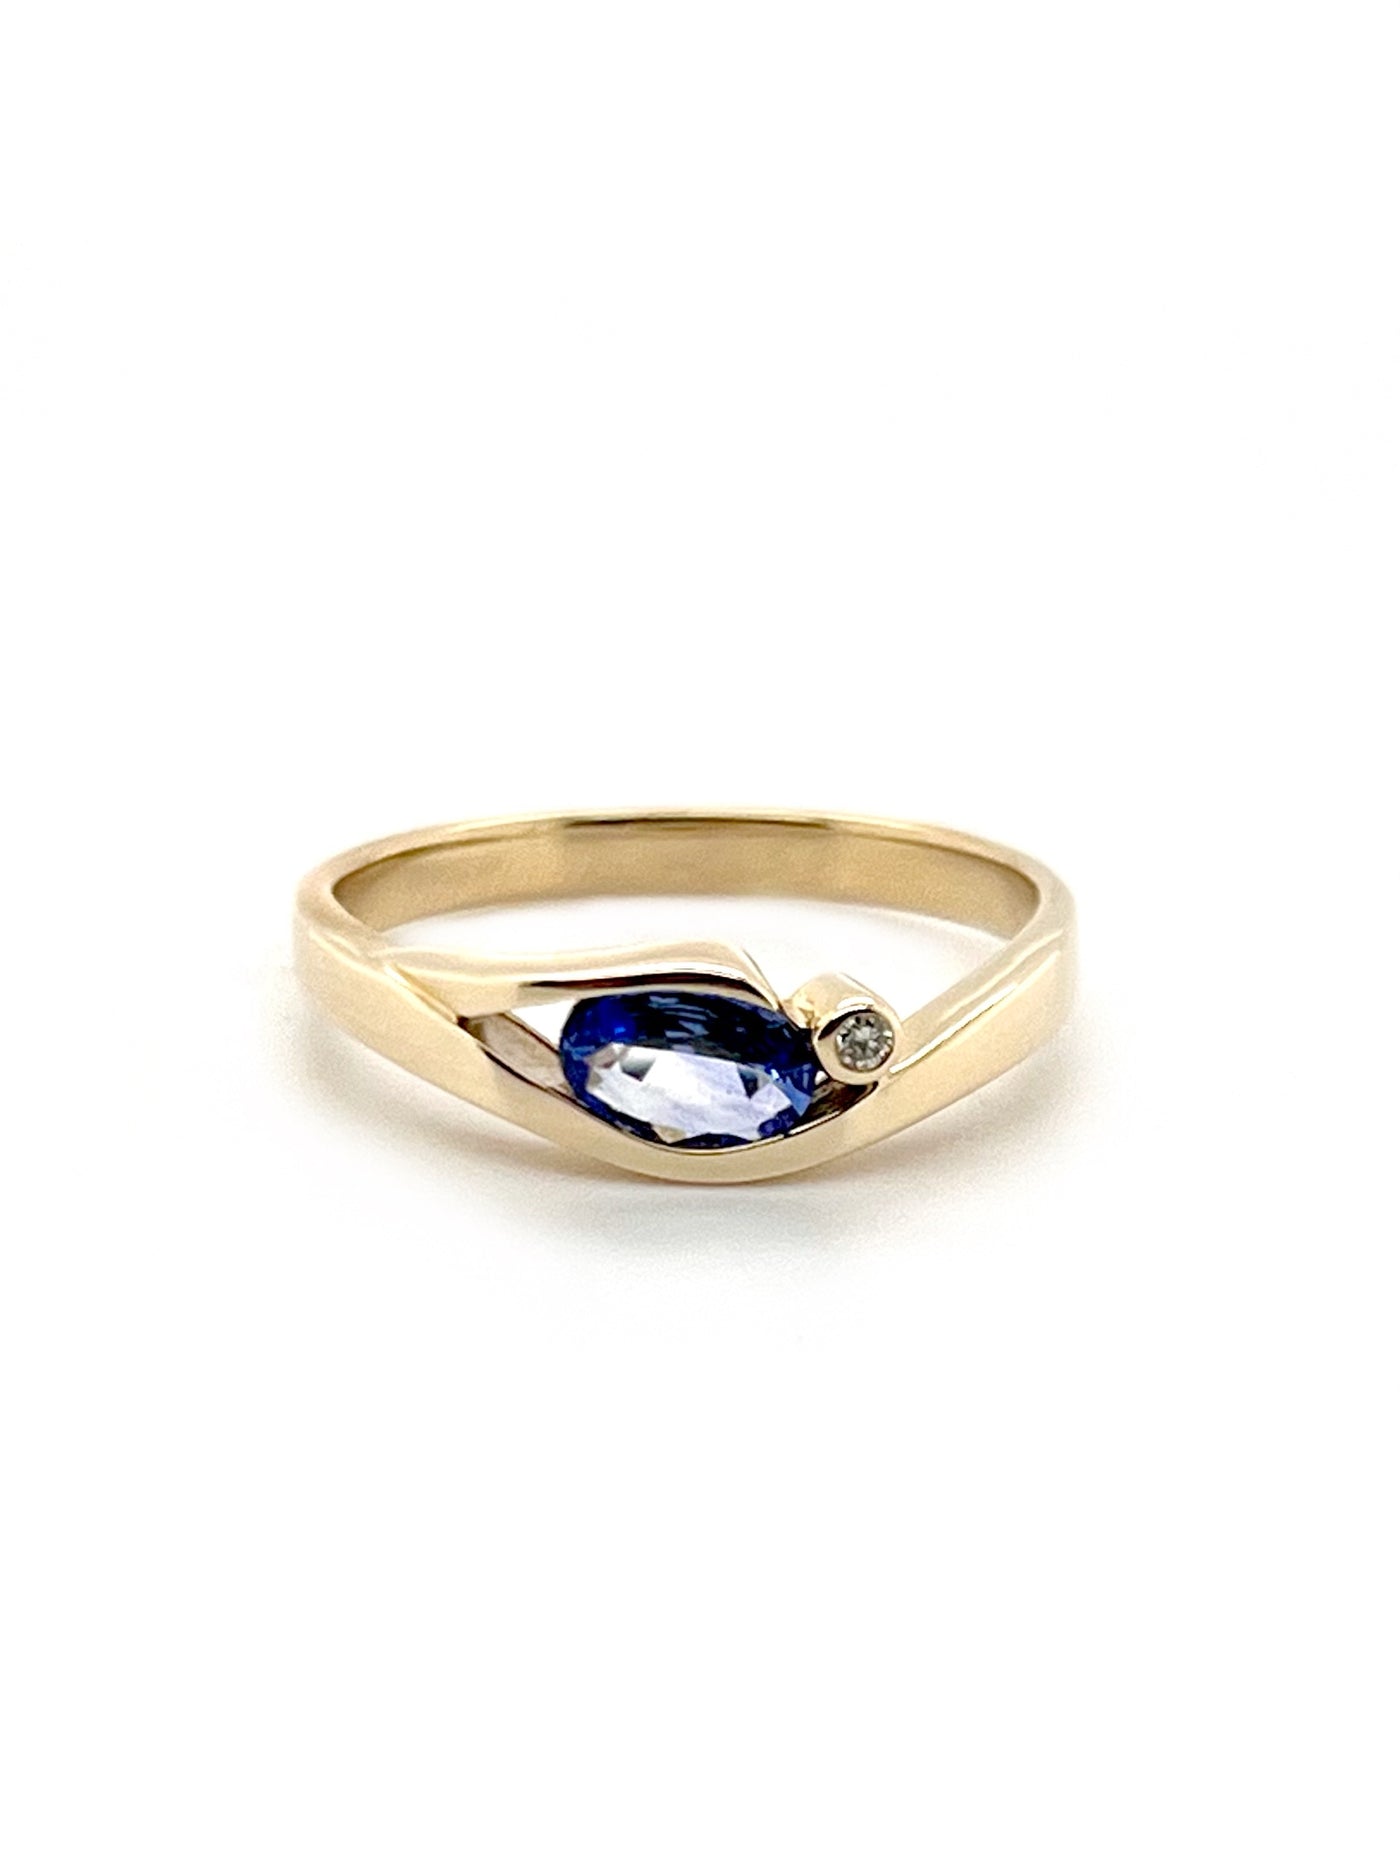 Ceylon sapphire with diamond ring